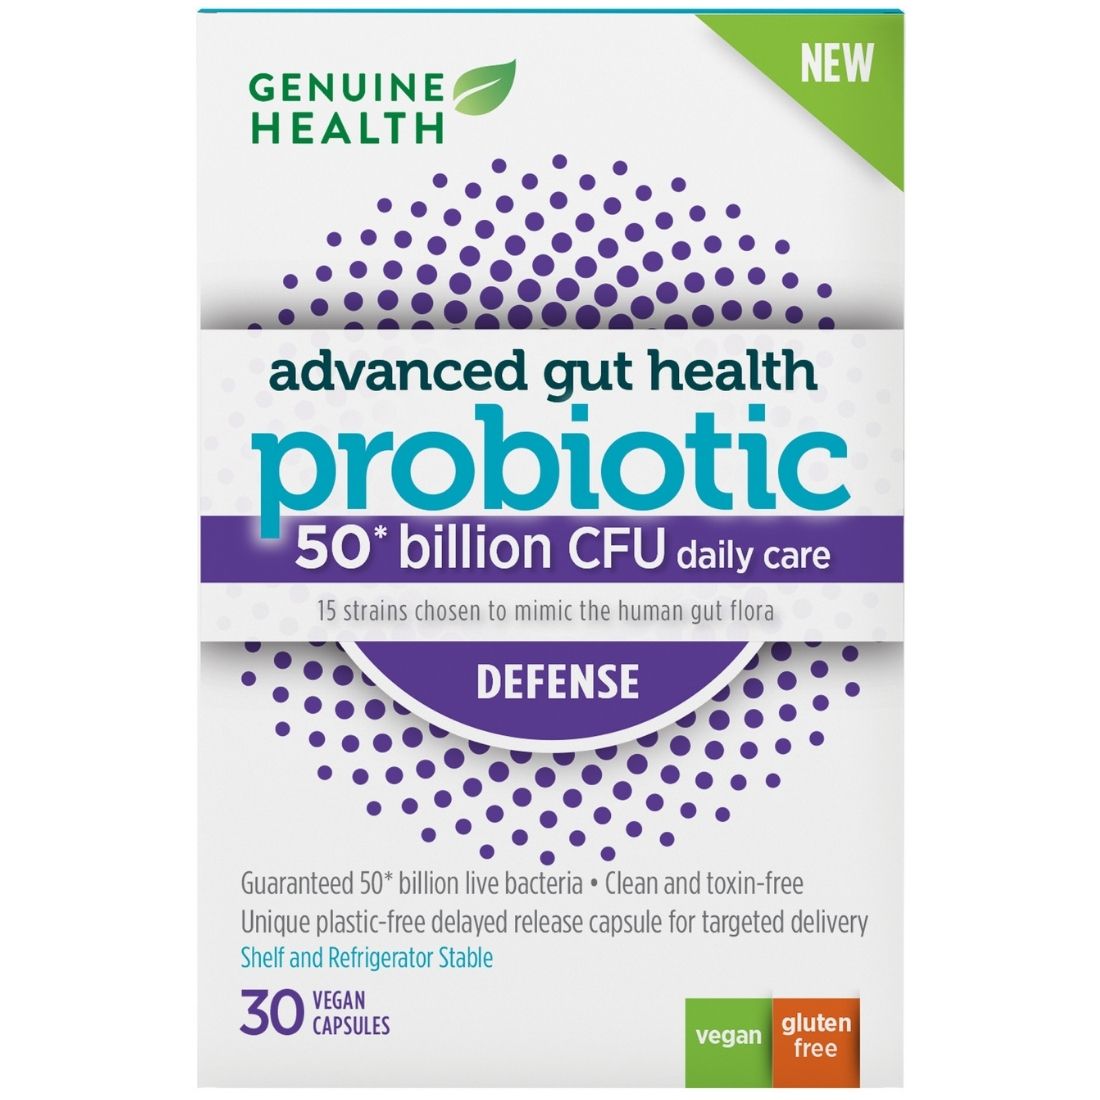 Genuine Health Advanced Gut Health Defense Probiotic 50 Billion CFU - 50% OFF - FINAL SALE